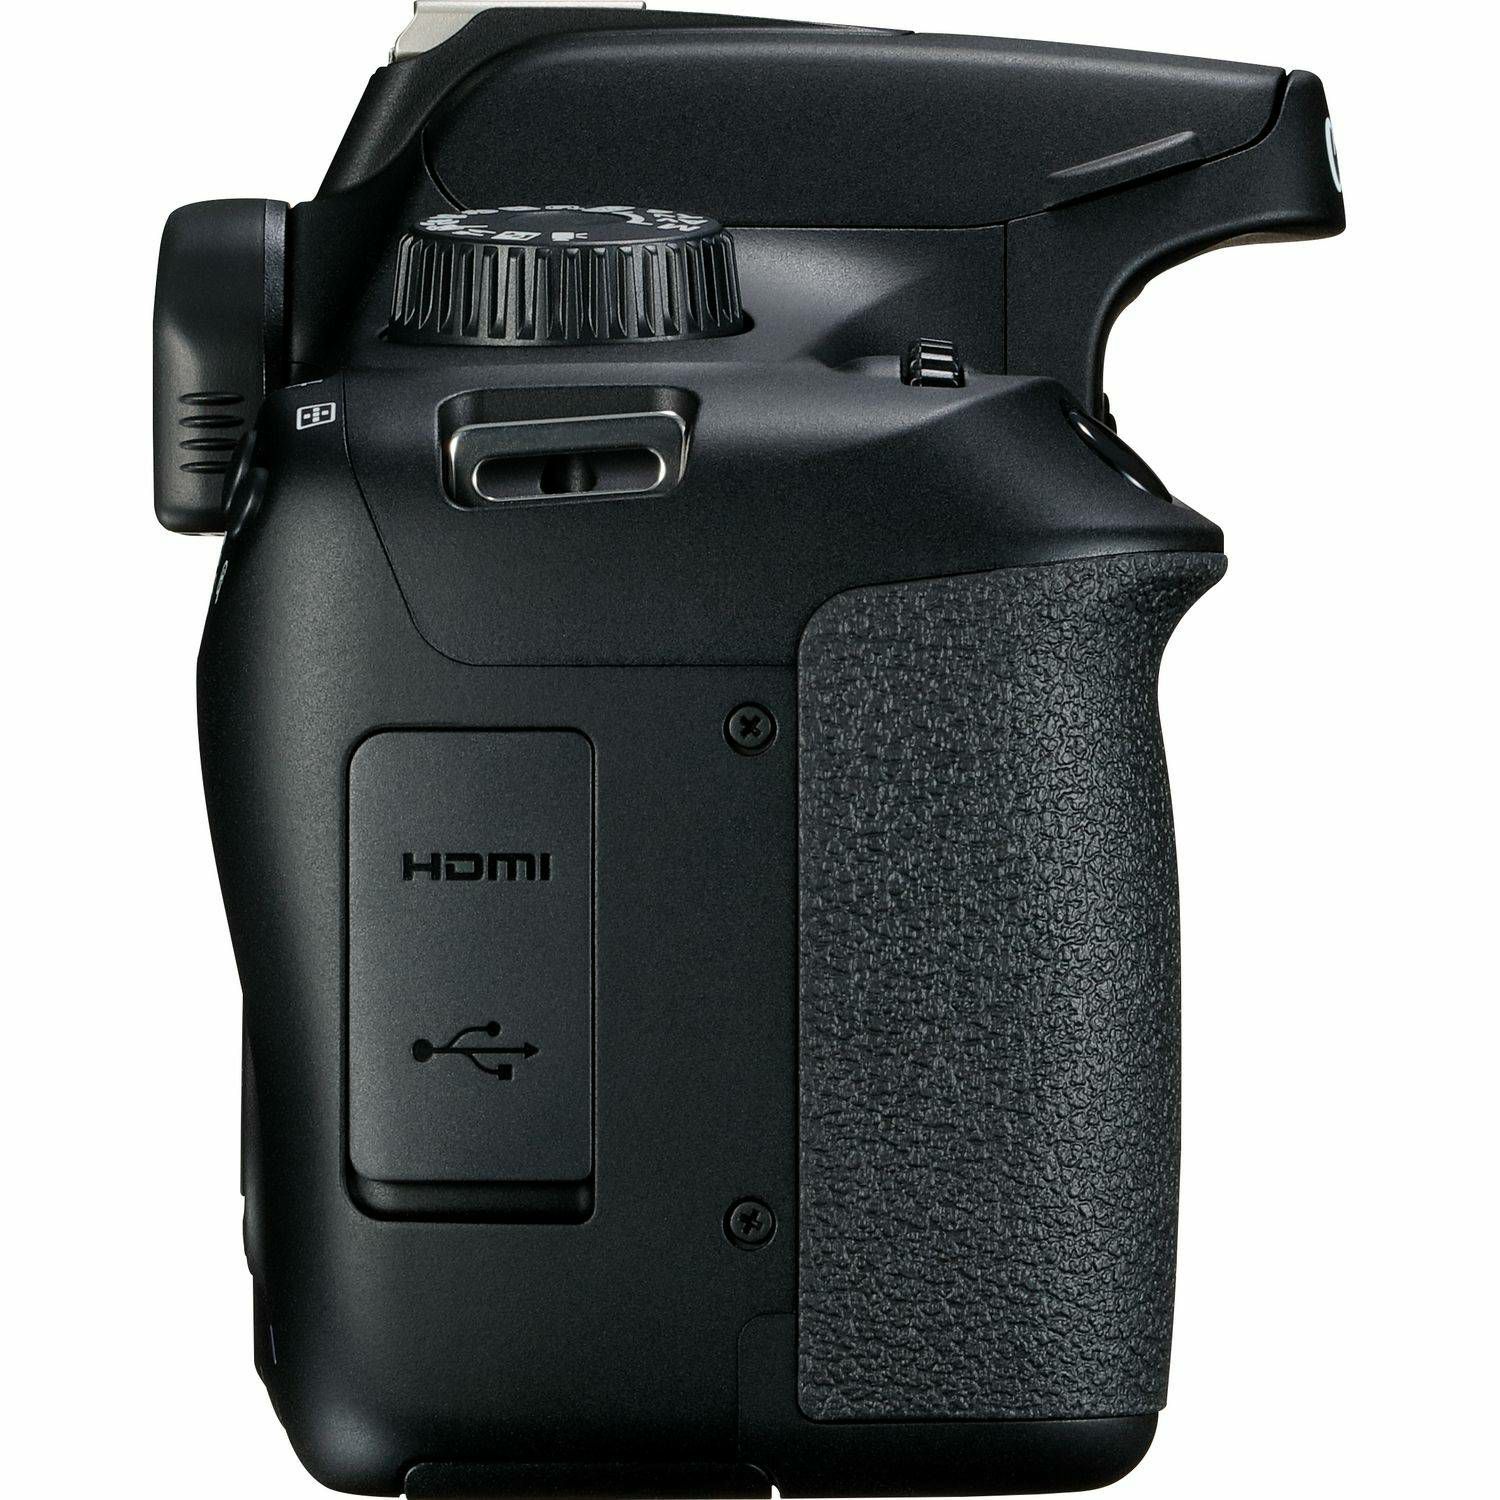 Canon EOS 4000D Body Black DSLR Digitalni fotoaparat tijelo (3011C016AA)